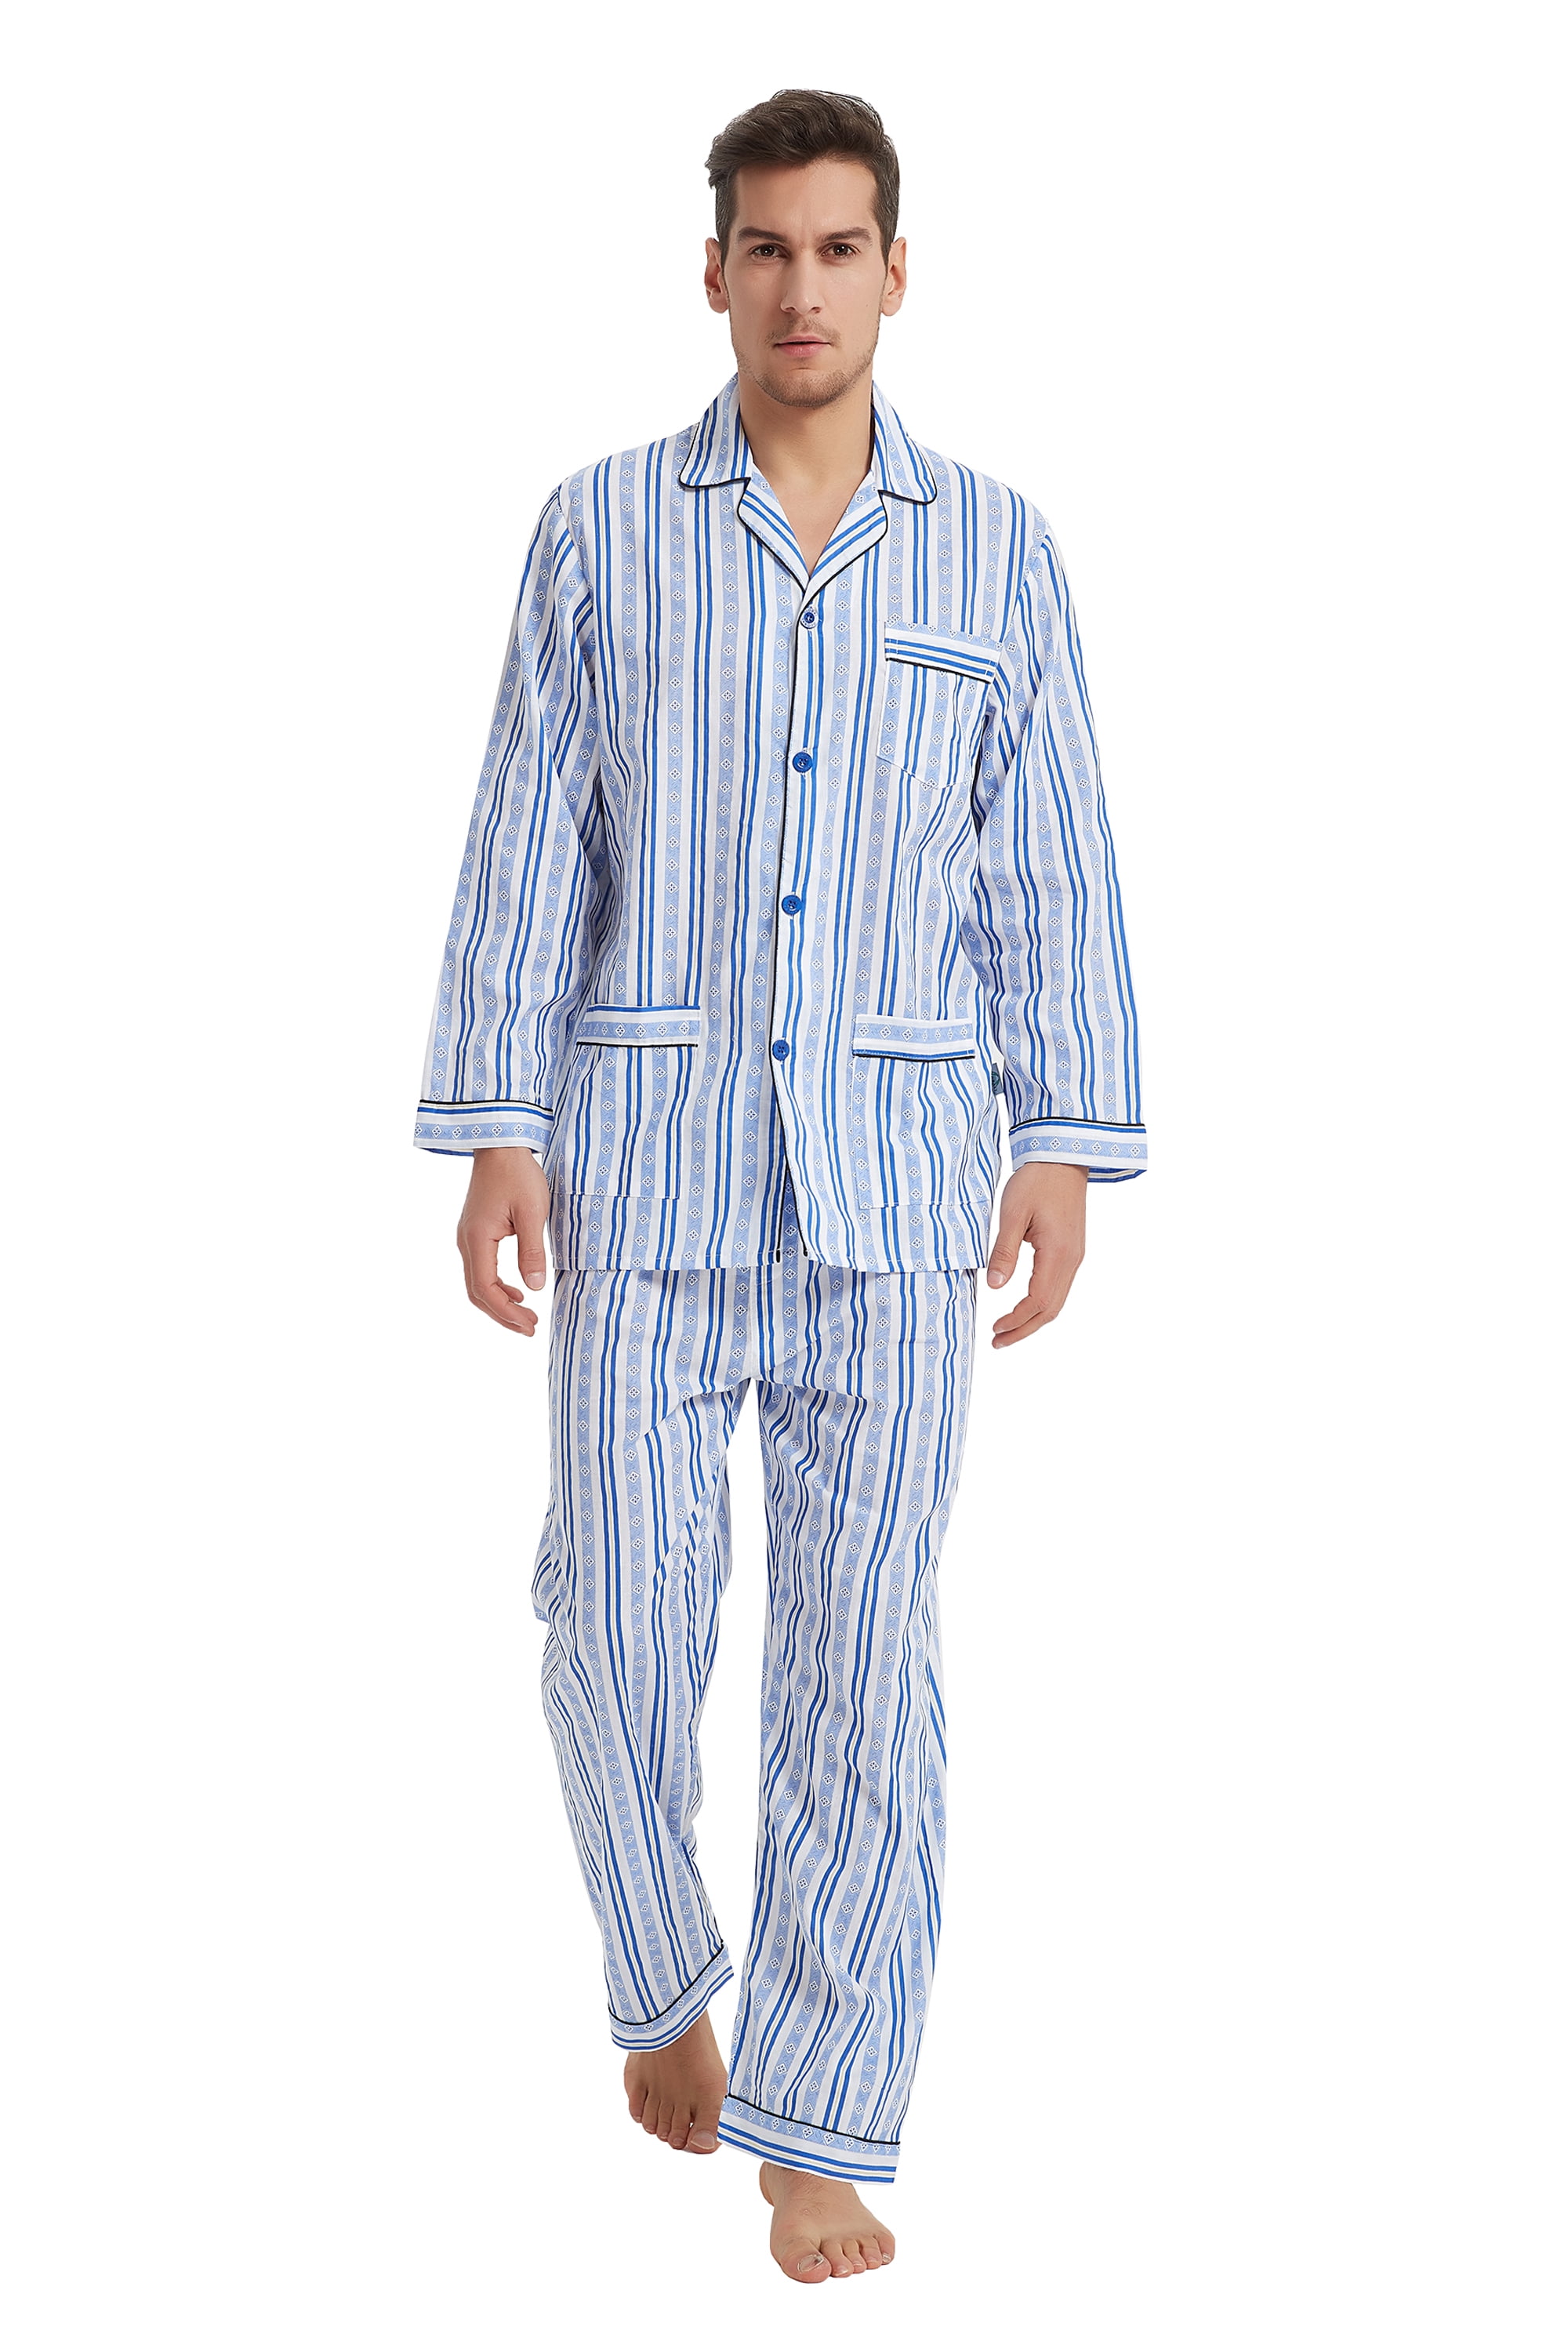 GLOBAL Mens 100% Cotton Pajamas Set Woven Drawstring Sleepwear Set with ...